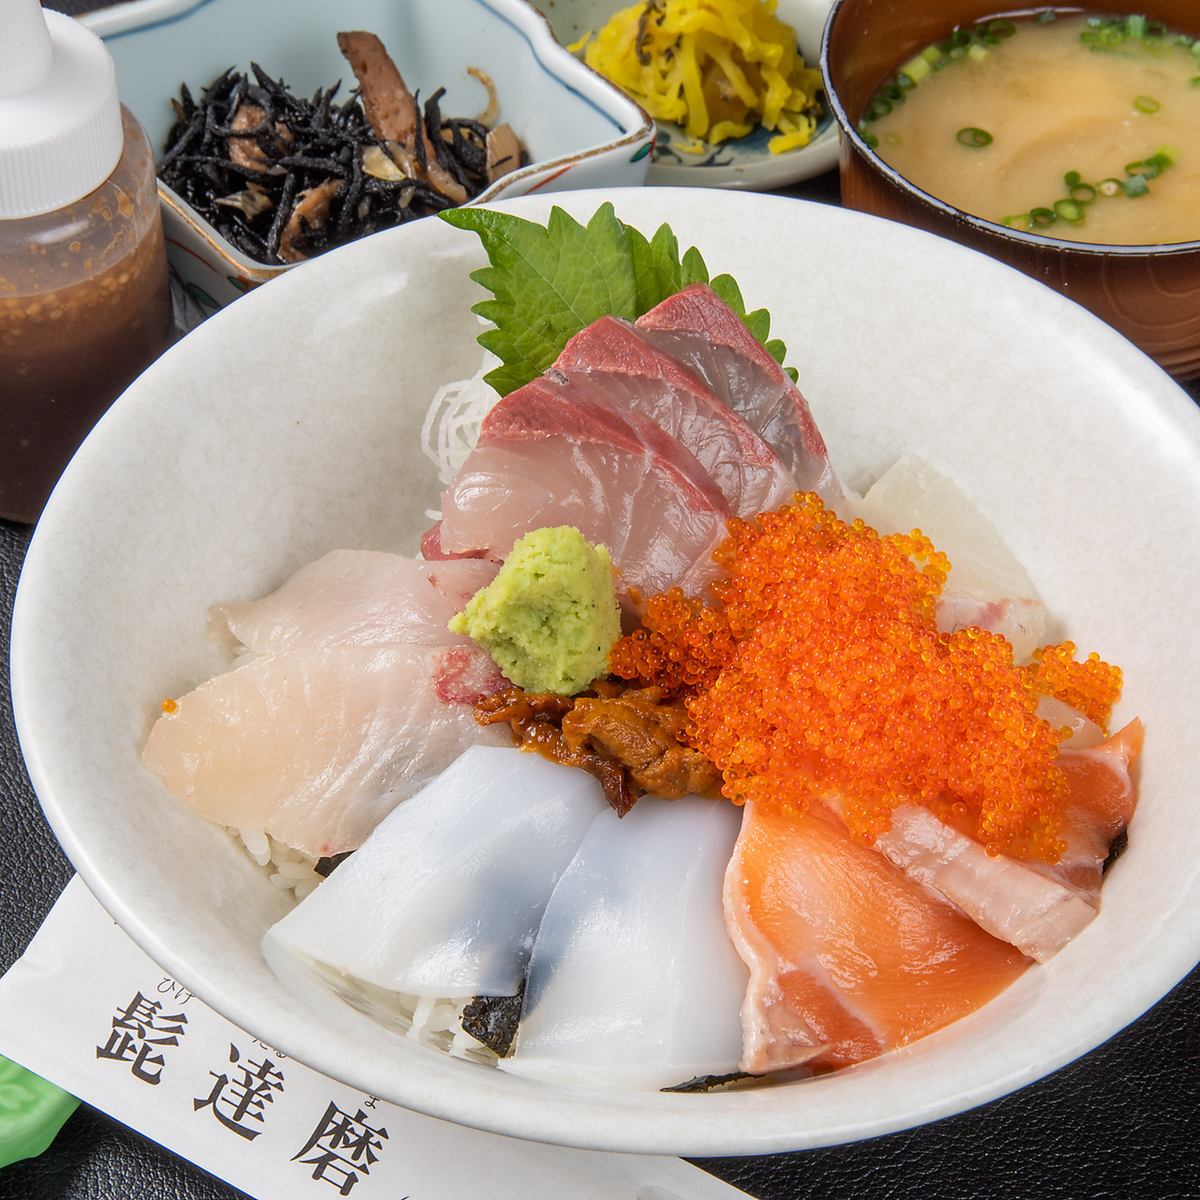 If you want to taste the freshest fish and shellfish, go to "Hige Tatsuma"!